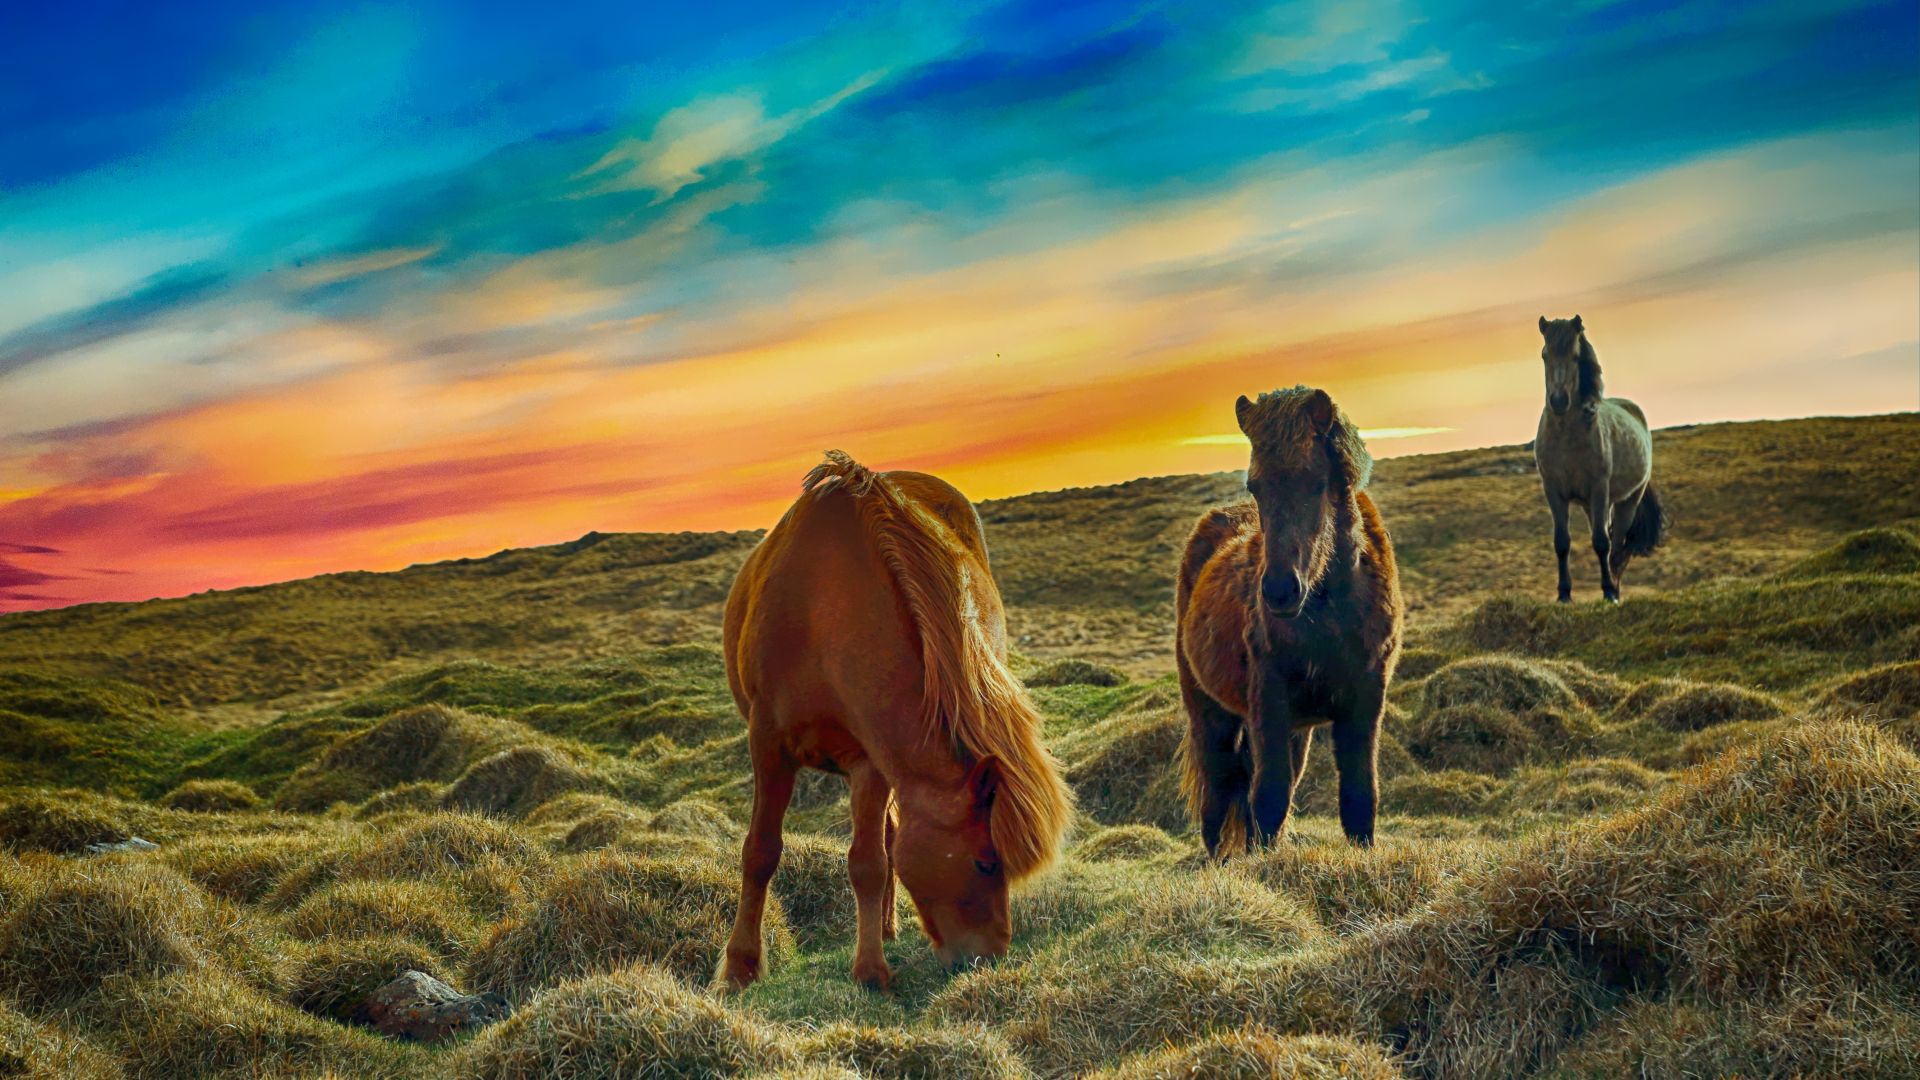 Desktop wallpaper animals horses grazing landscape hd image picture background b